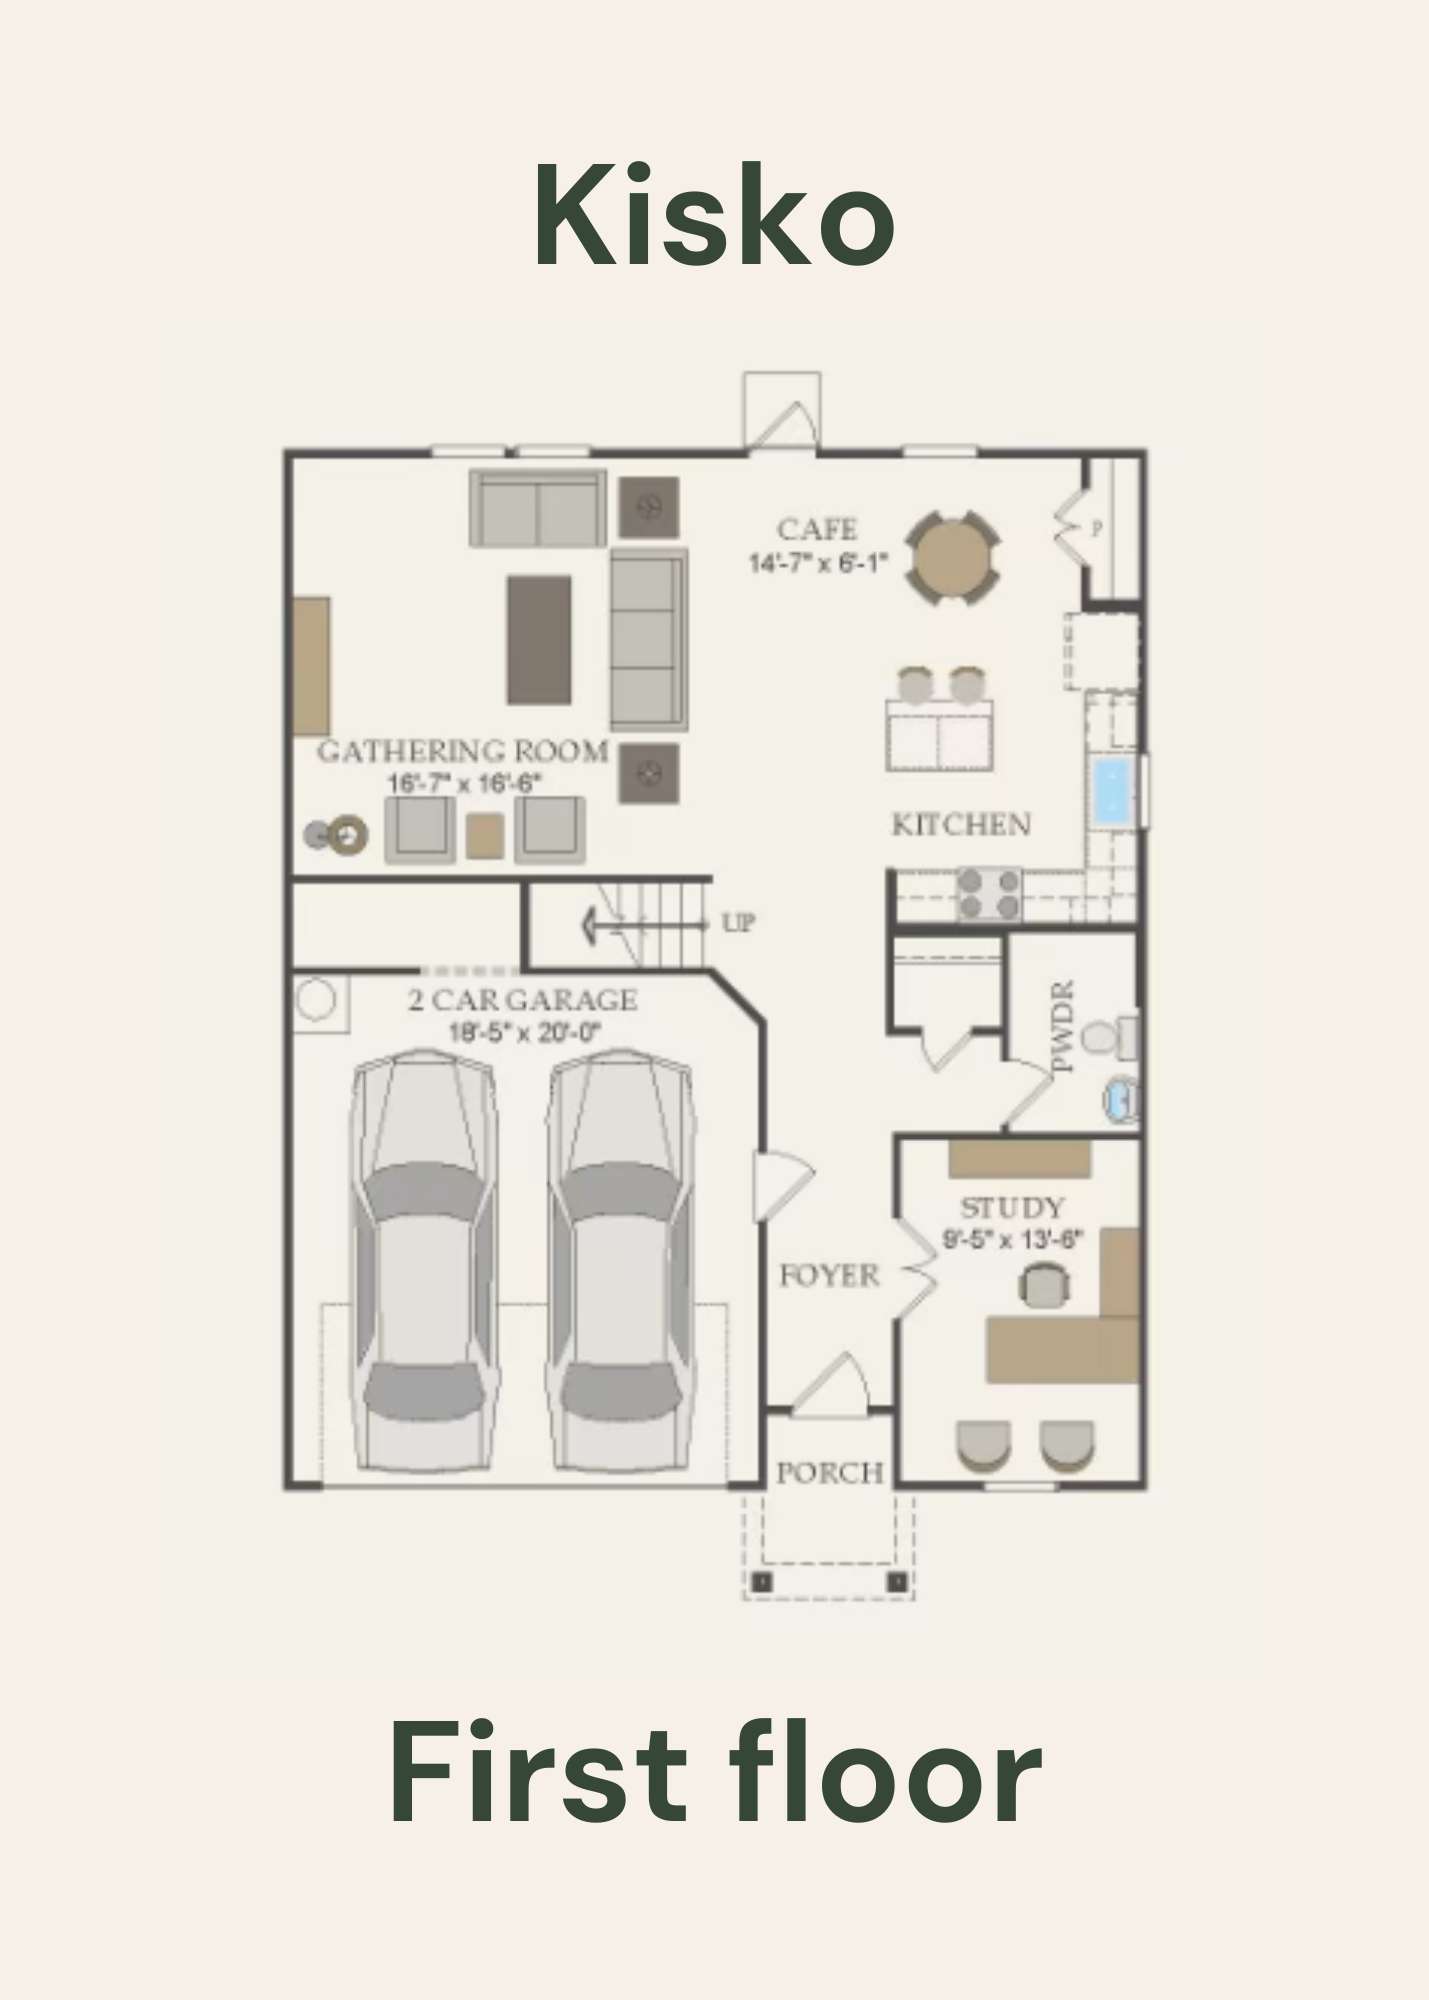 Kisko First Floor - Floor Plan by Centex Homes